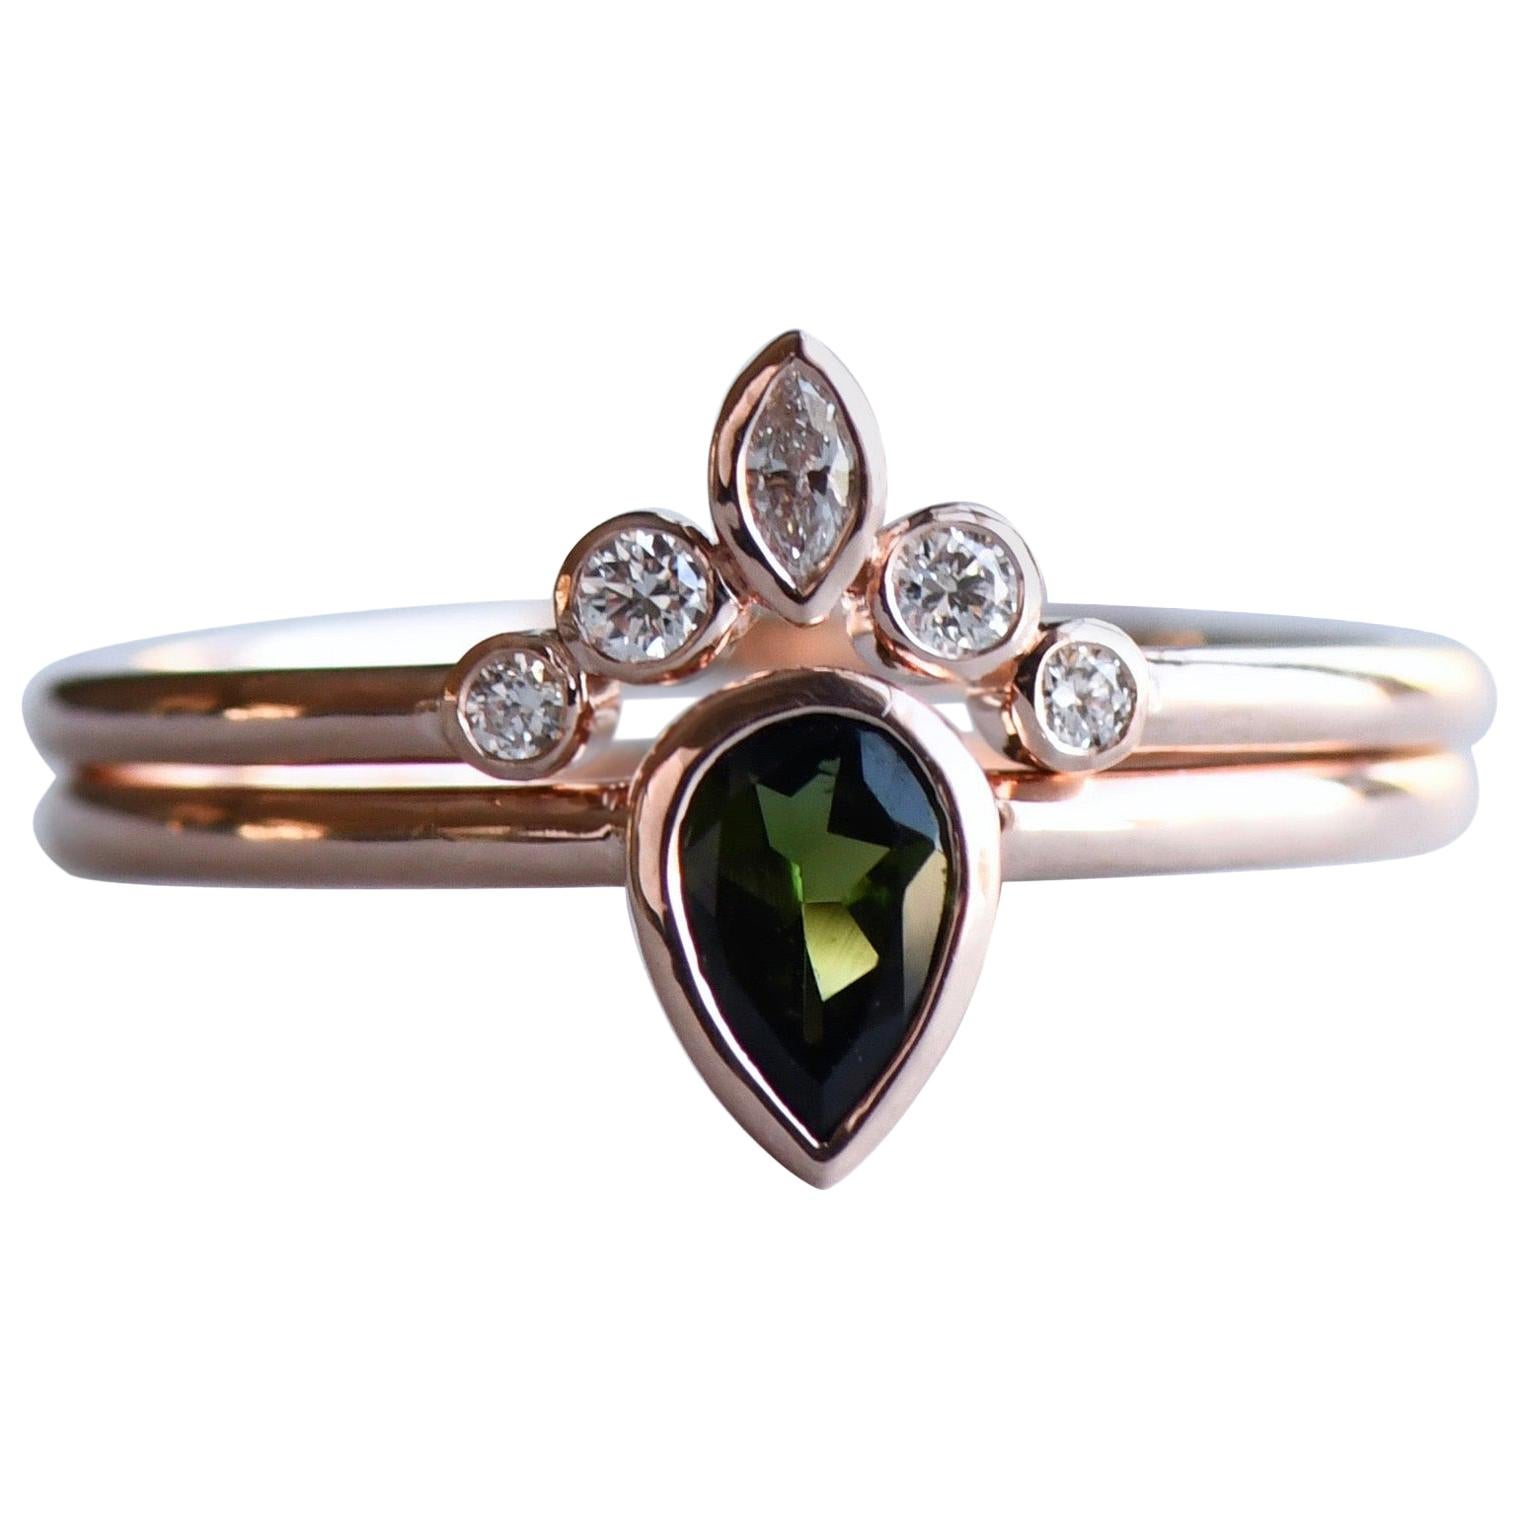 For Sale:  Green Tourmaline Teardrop Ring in 14 Karat Rose Gold with Diamond Ring Guard